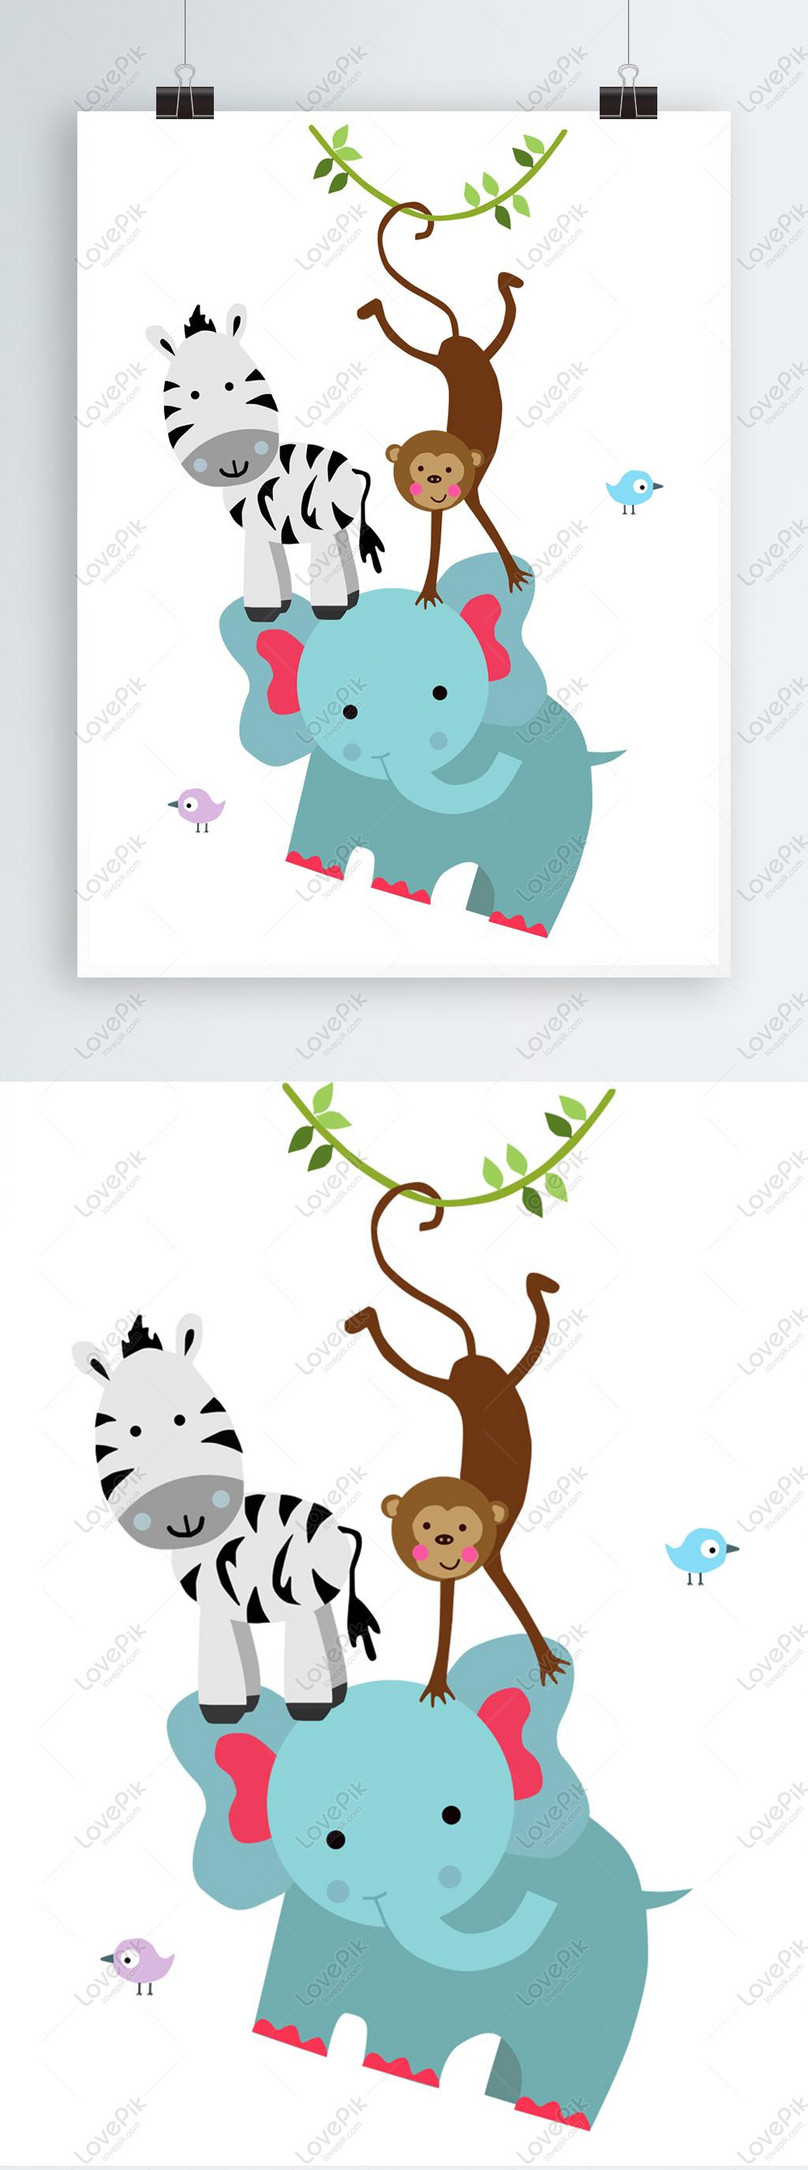 Hd Elephant Friends Cartoon Element Pattern PNG Transparent Background PSD  images free download_2805 × 1024 px - Lovepik